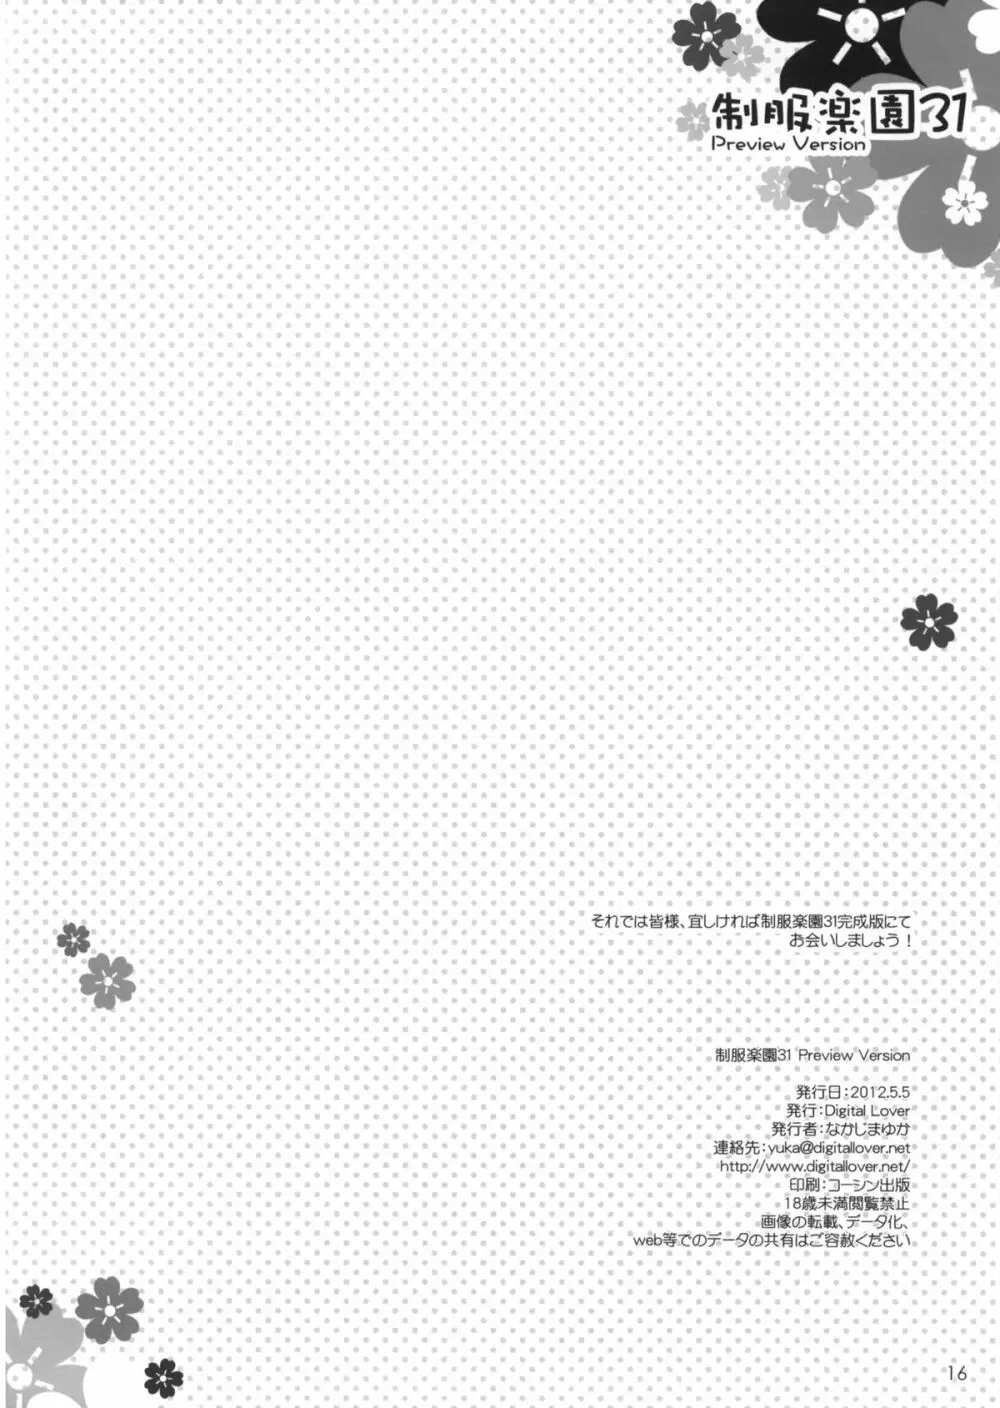 制服楽園 31 Preview Version - page16